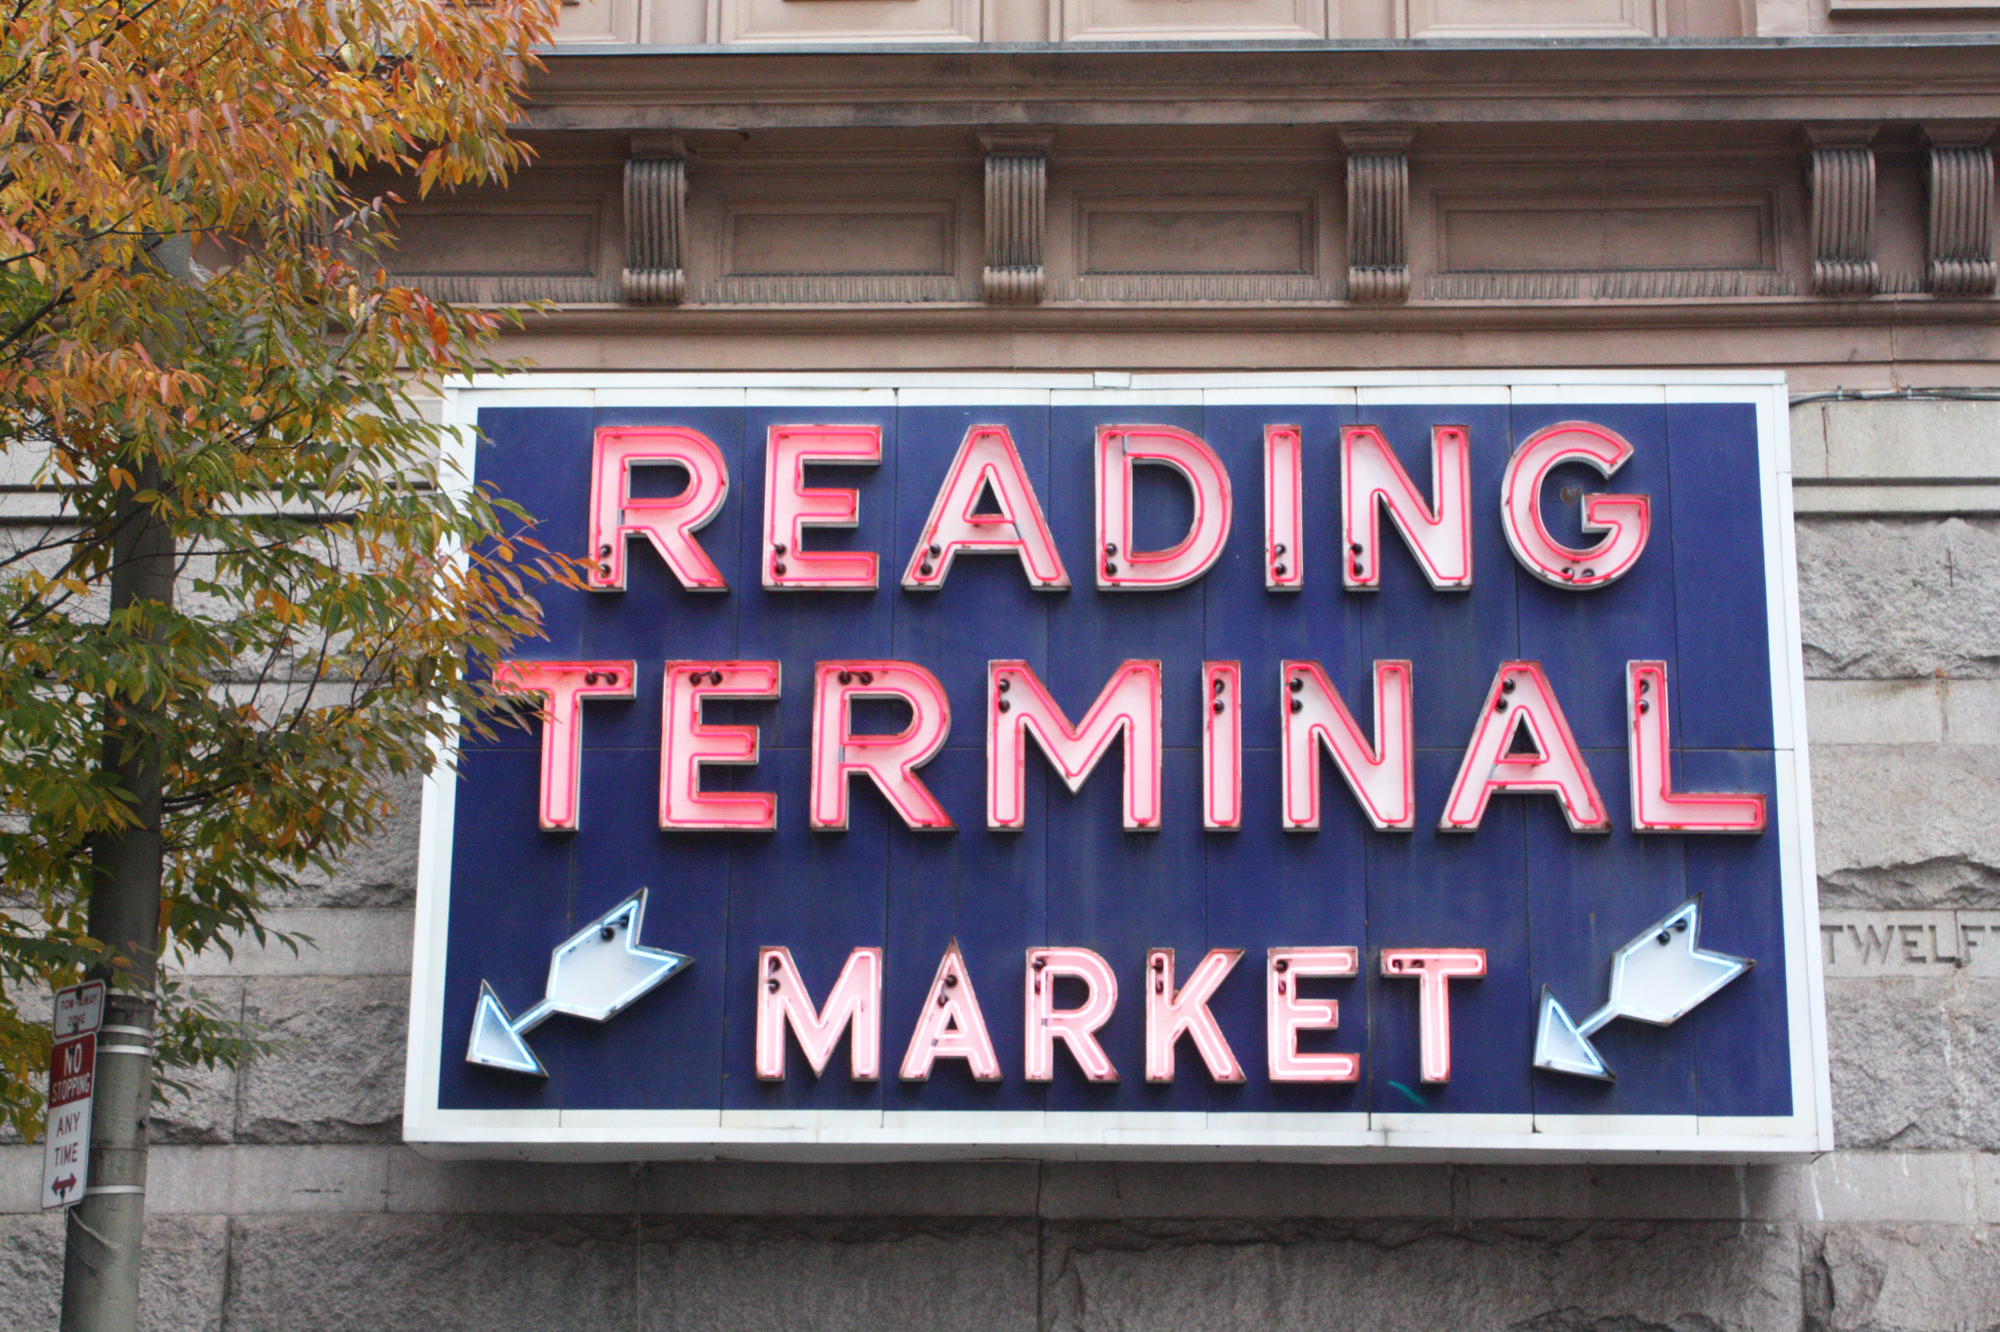 Reading Terminal Market. Reading terminal